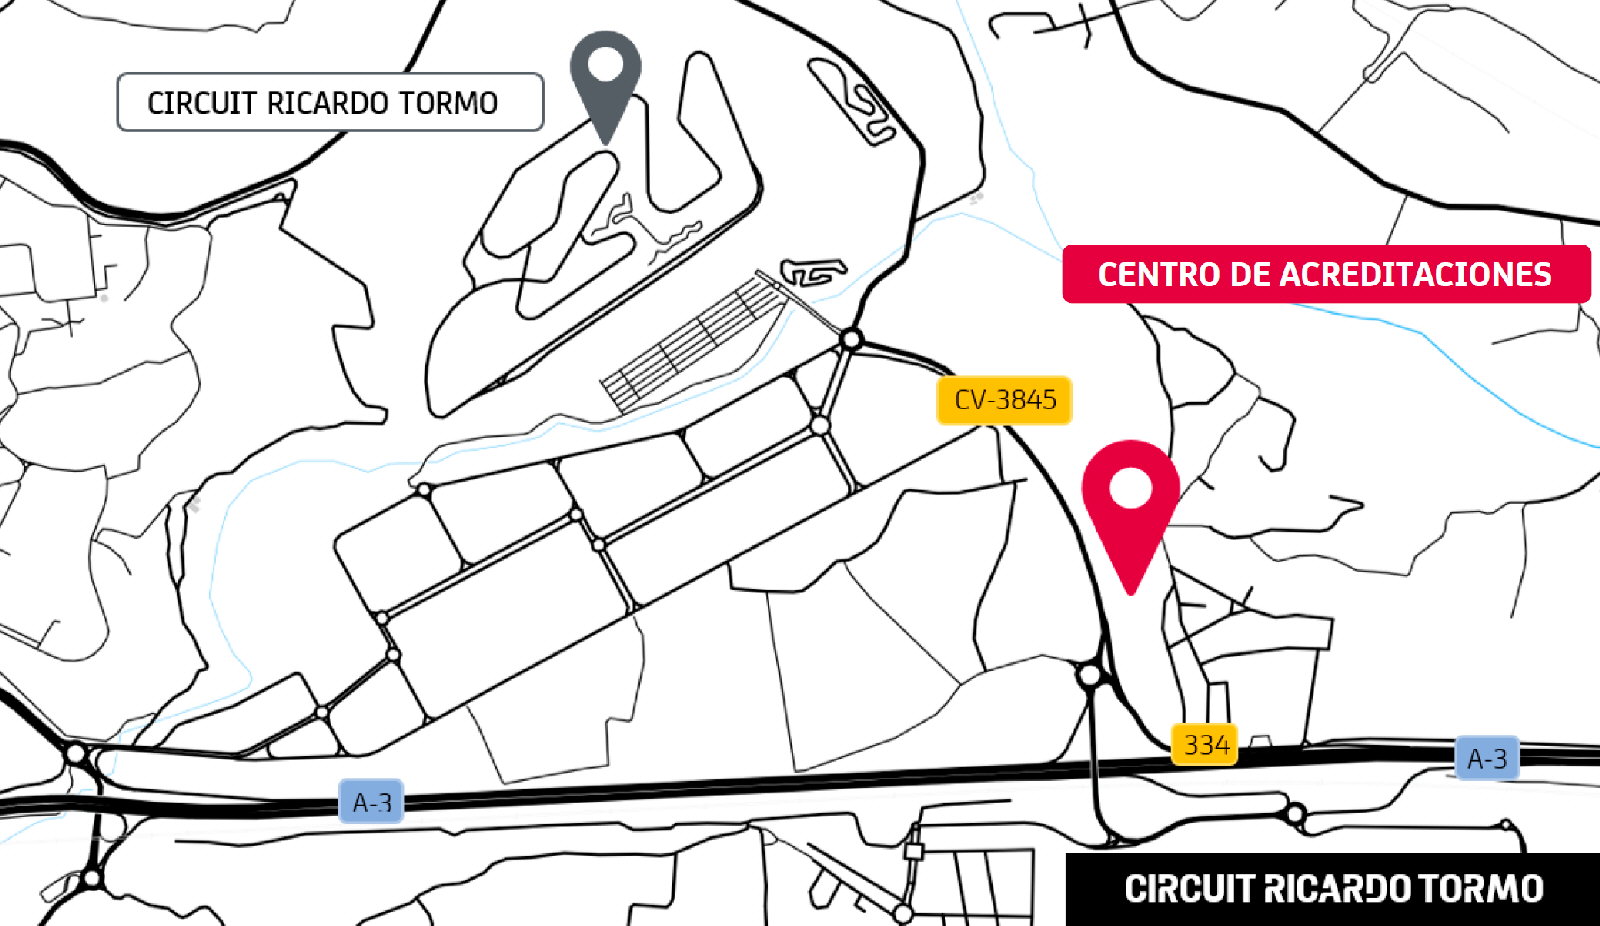 Accreditation Center and Ricardo Tormo Circuit Map